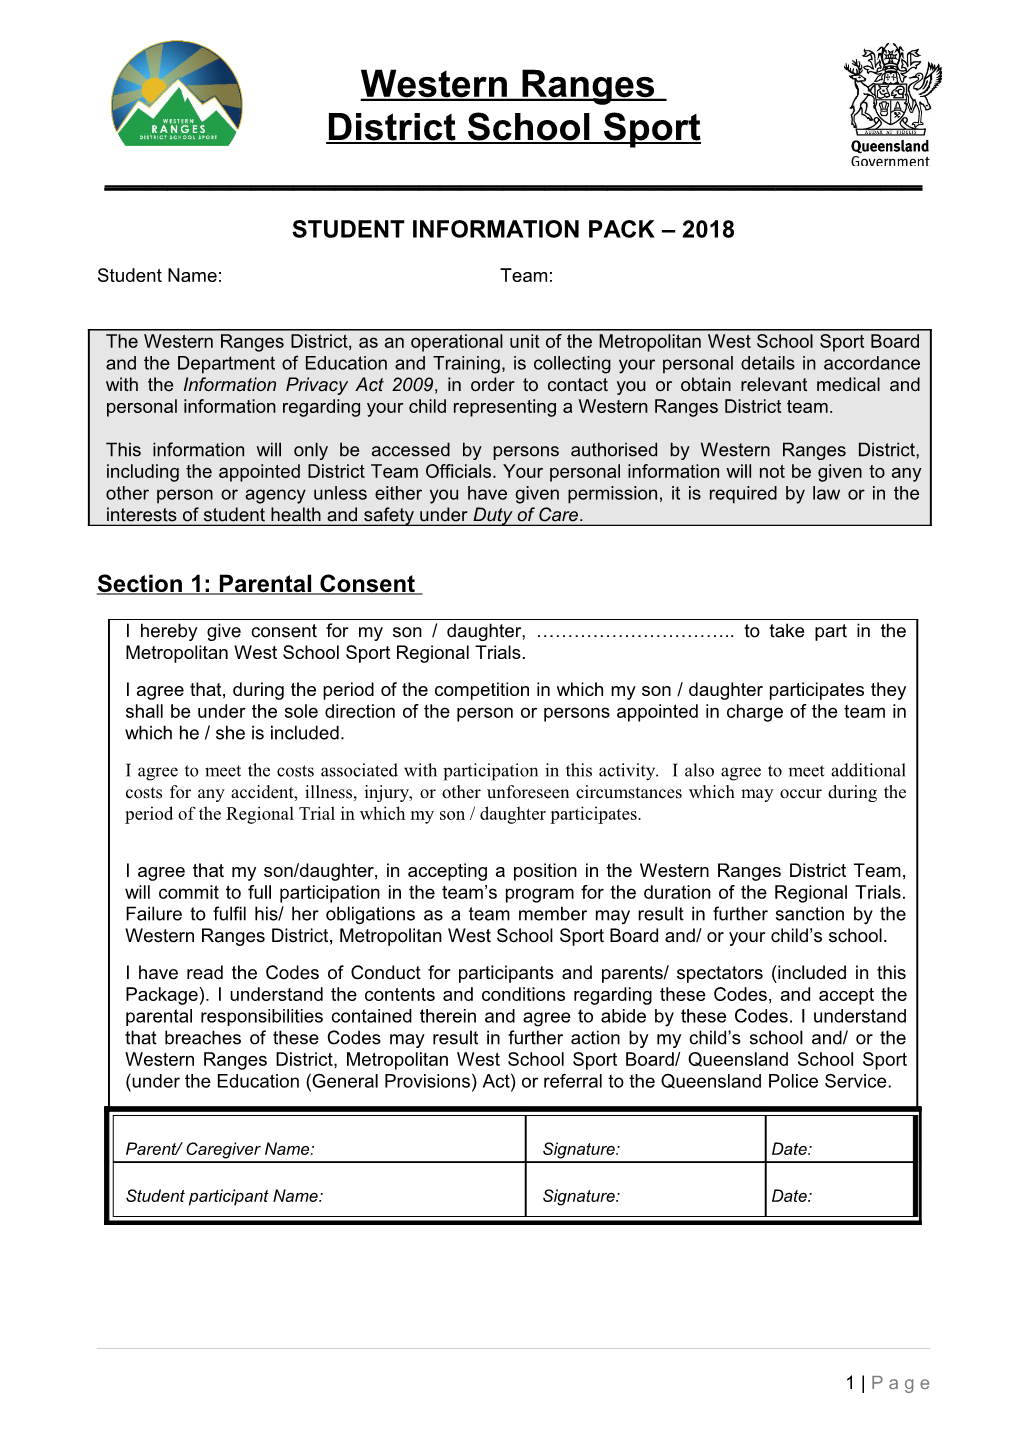 Student-Information-Pack-Western-Ranges